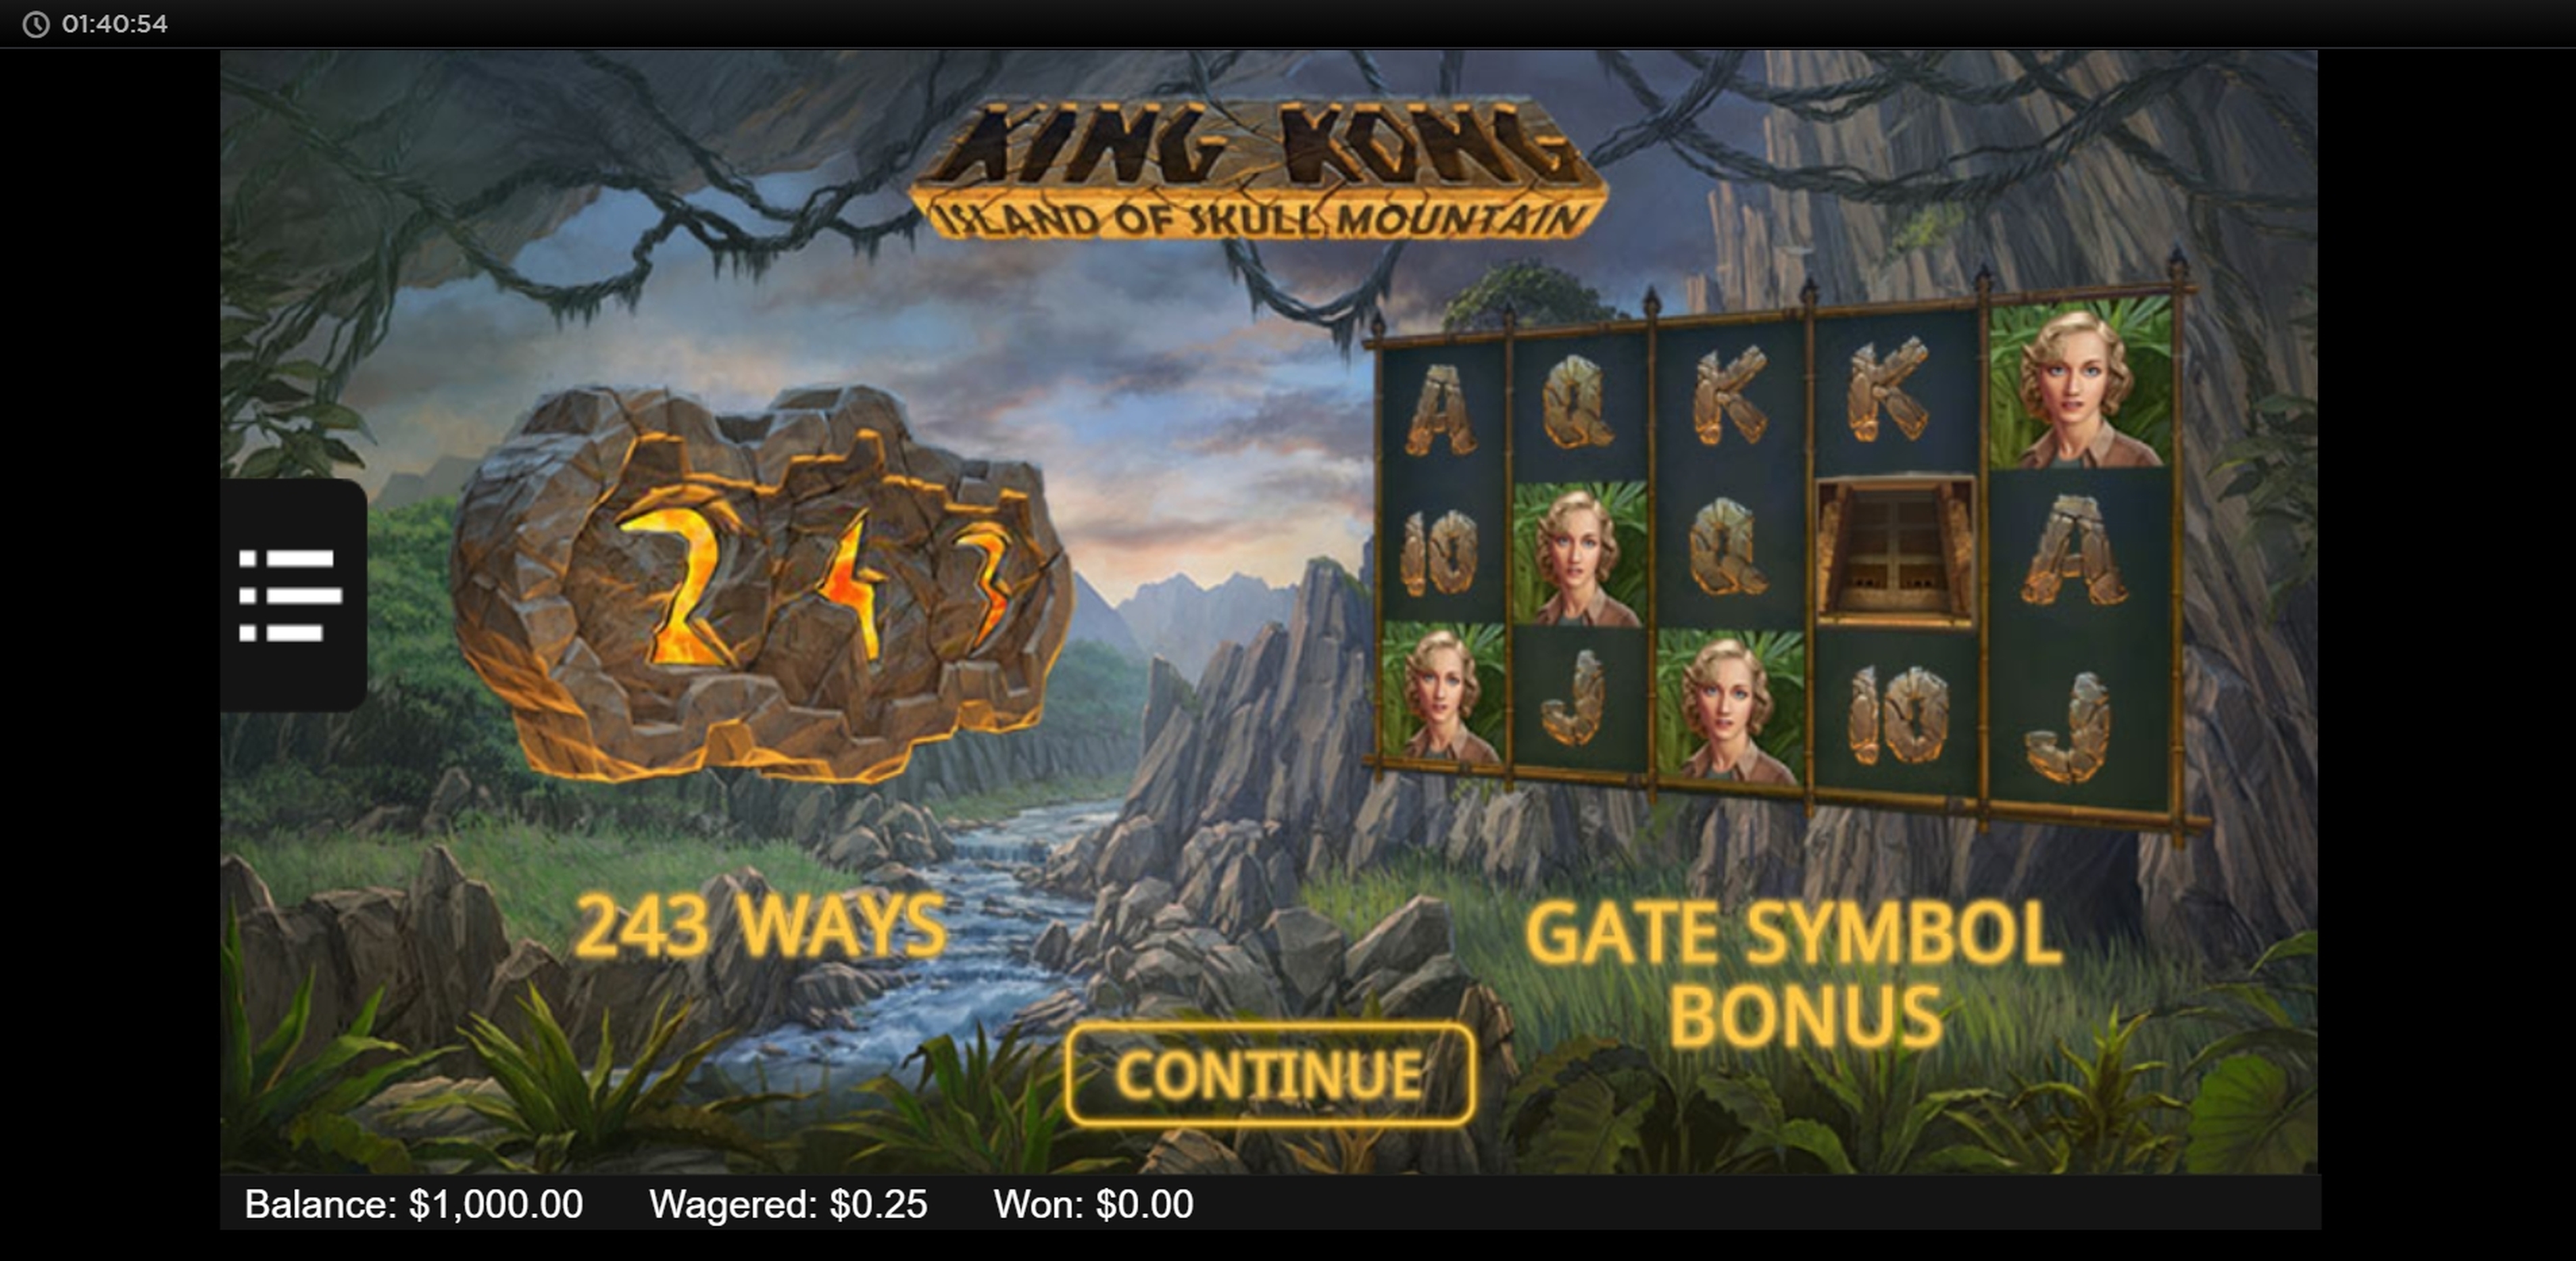 Play King Kong: Island of Skull Mountain Free Casino Slot Game by NYX Gaming Group